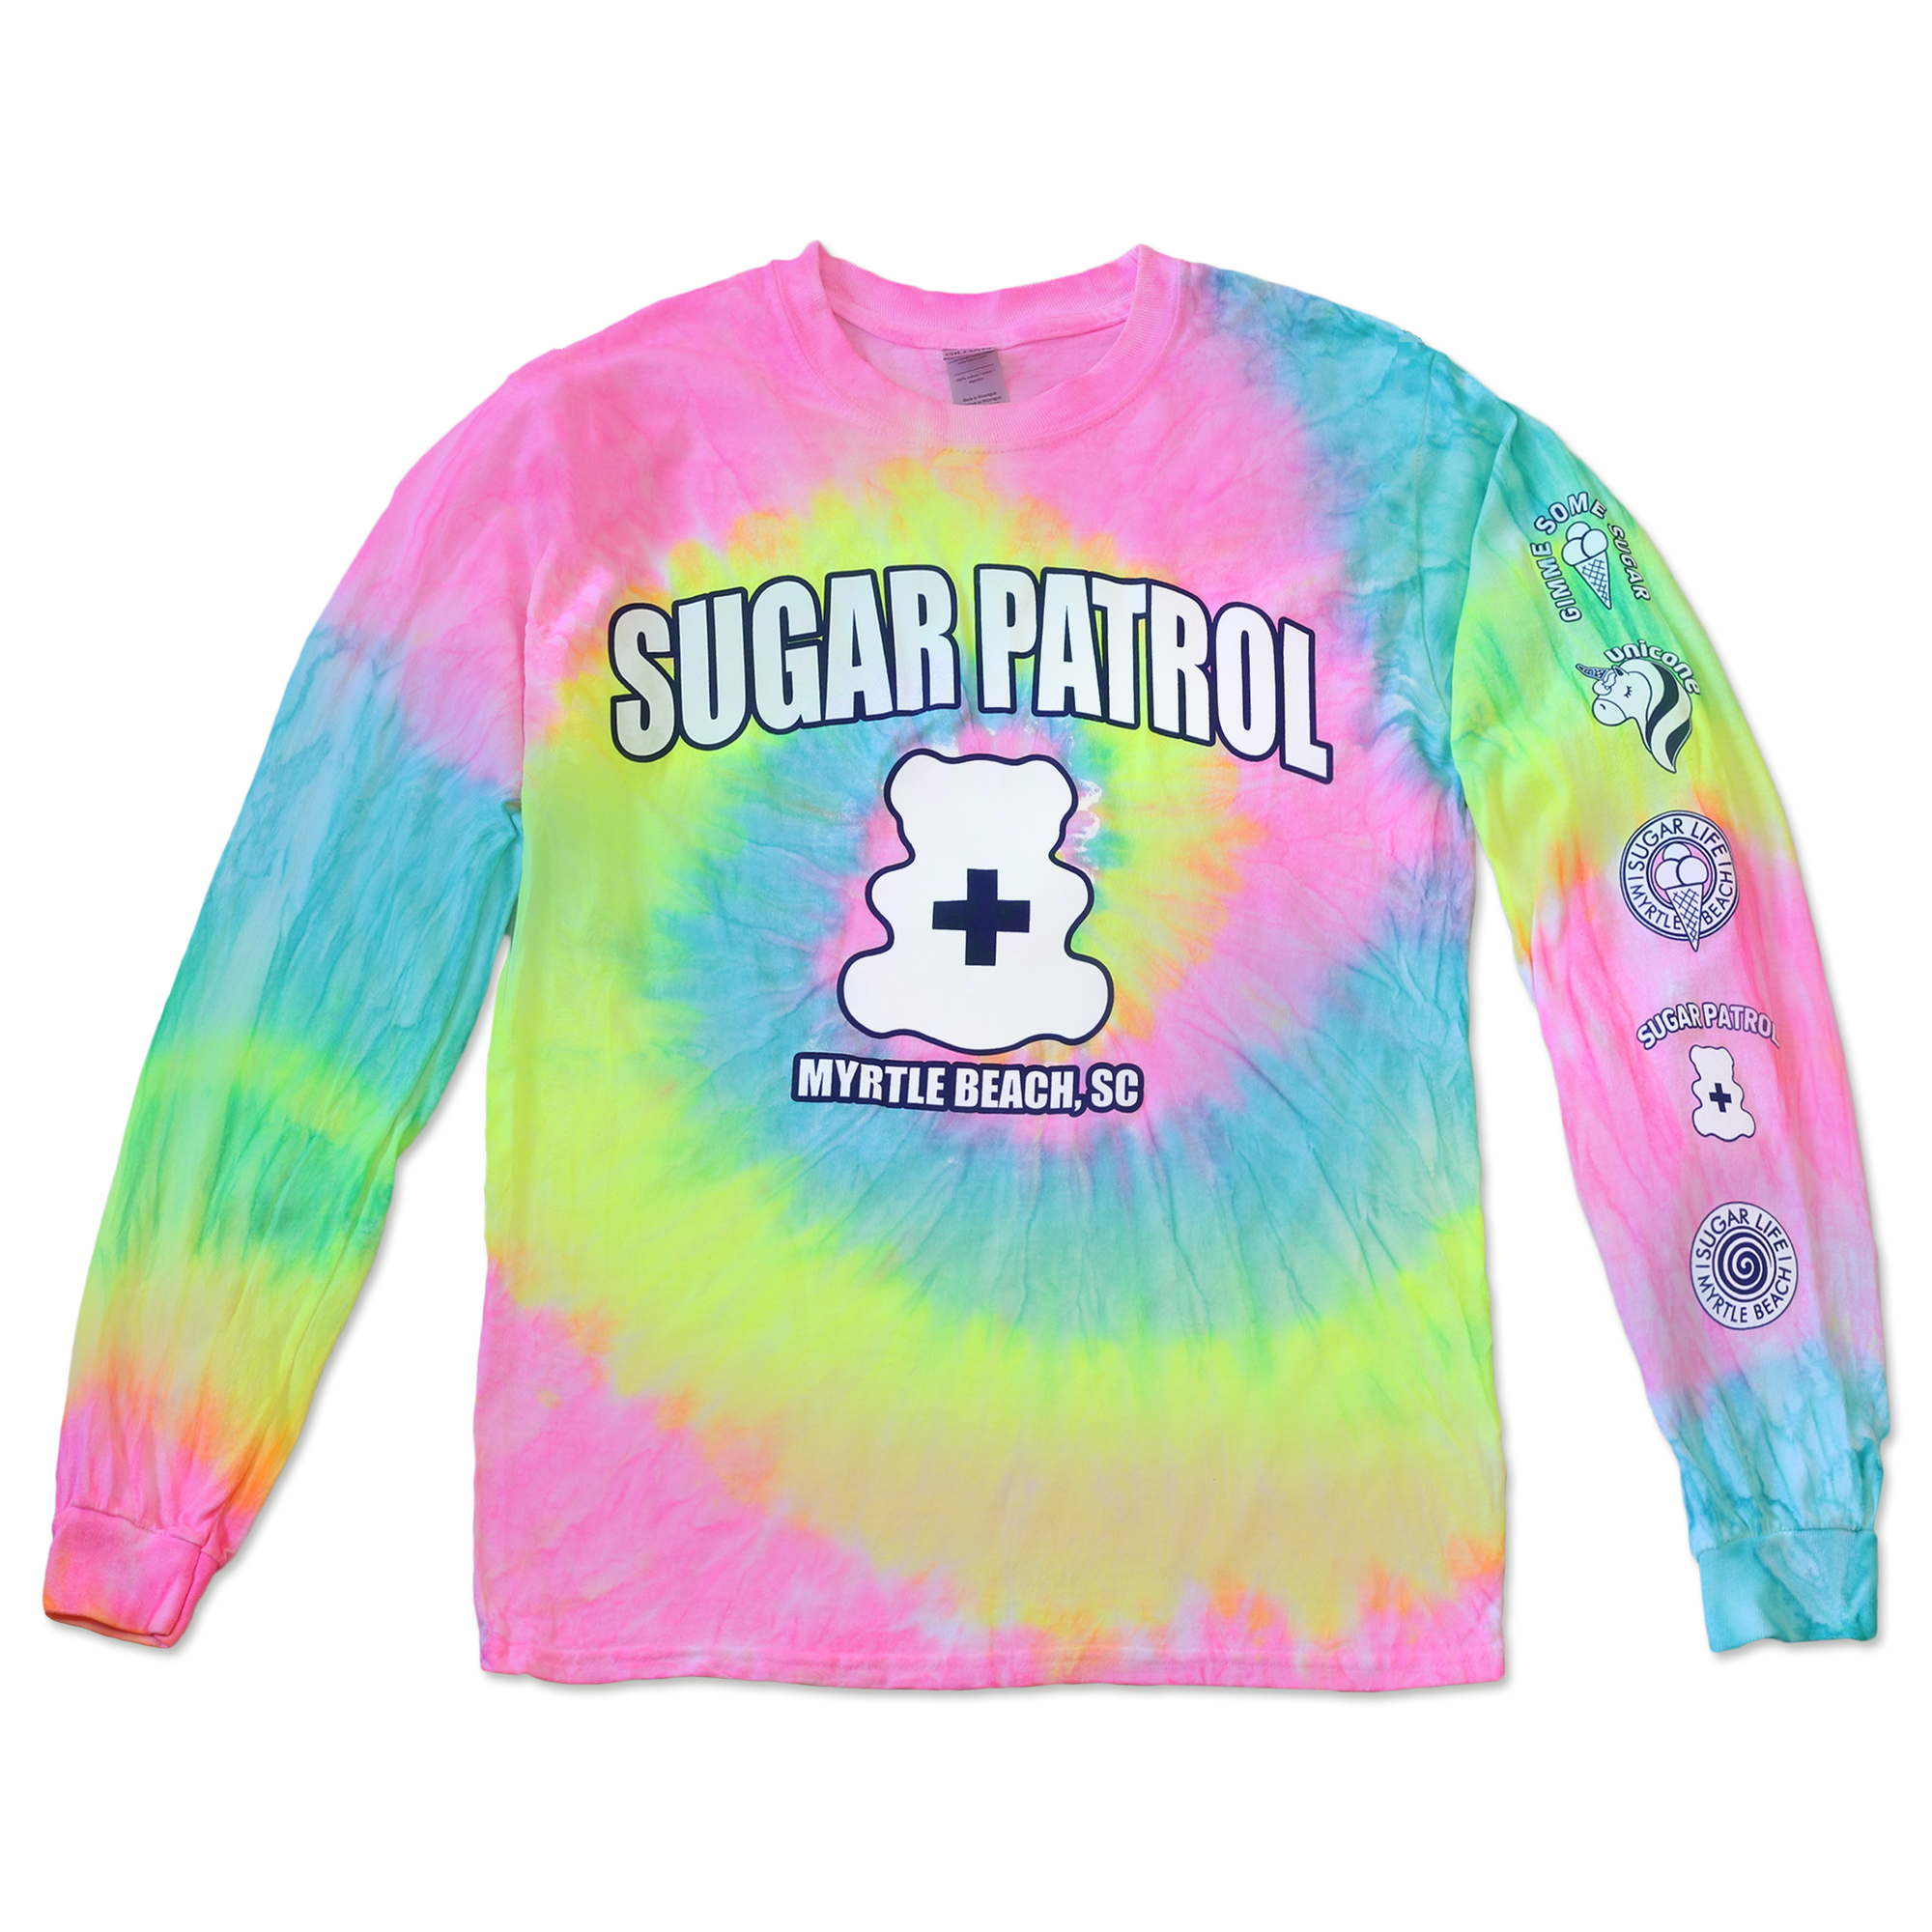 Sugar Life "Sugar Patrol" Neon Rainbow Tie Dye - Long Sleeve